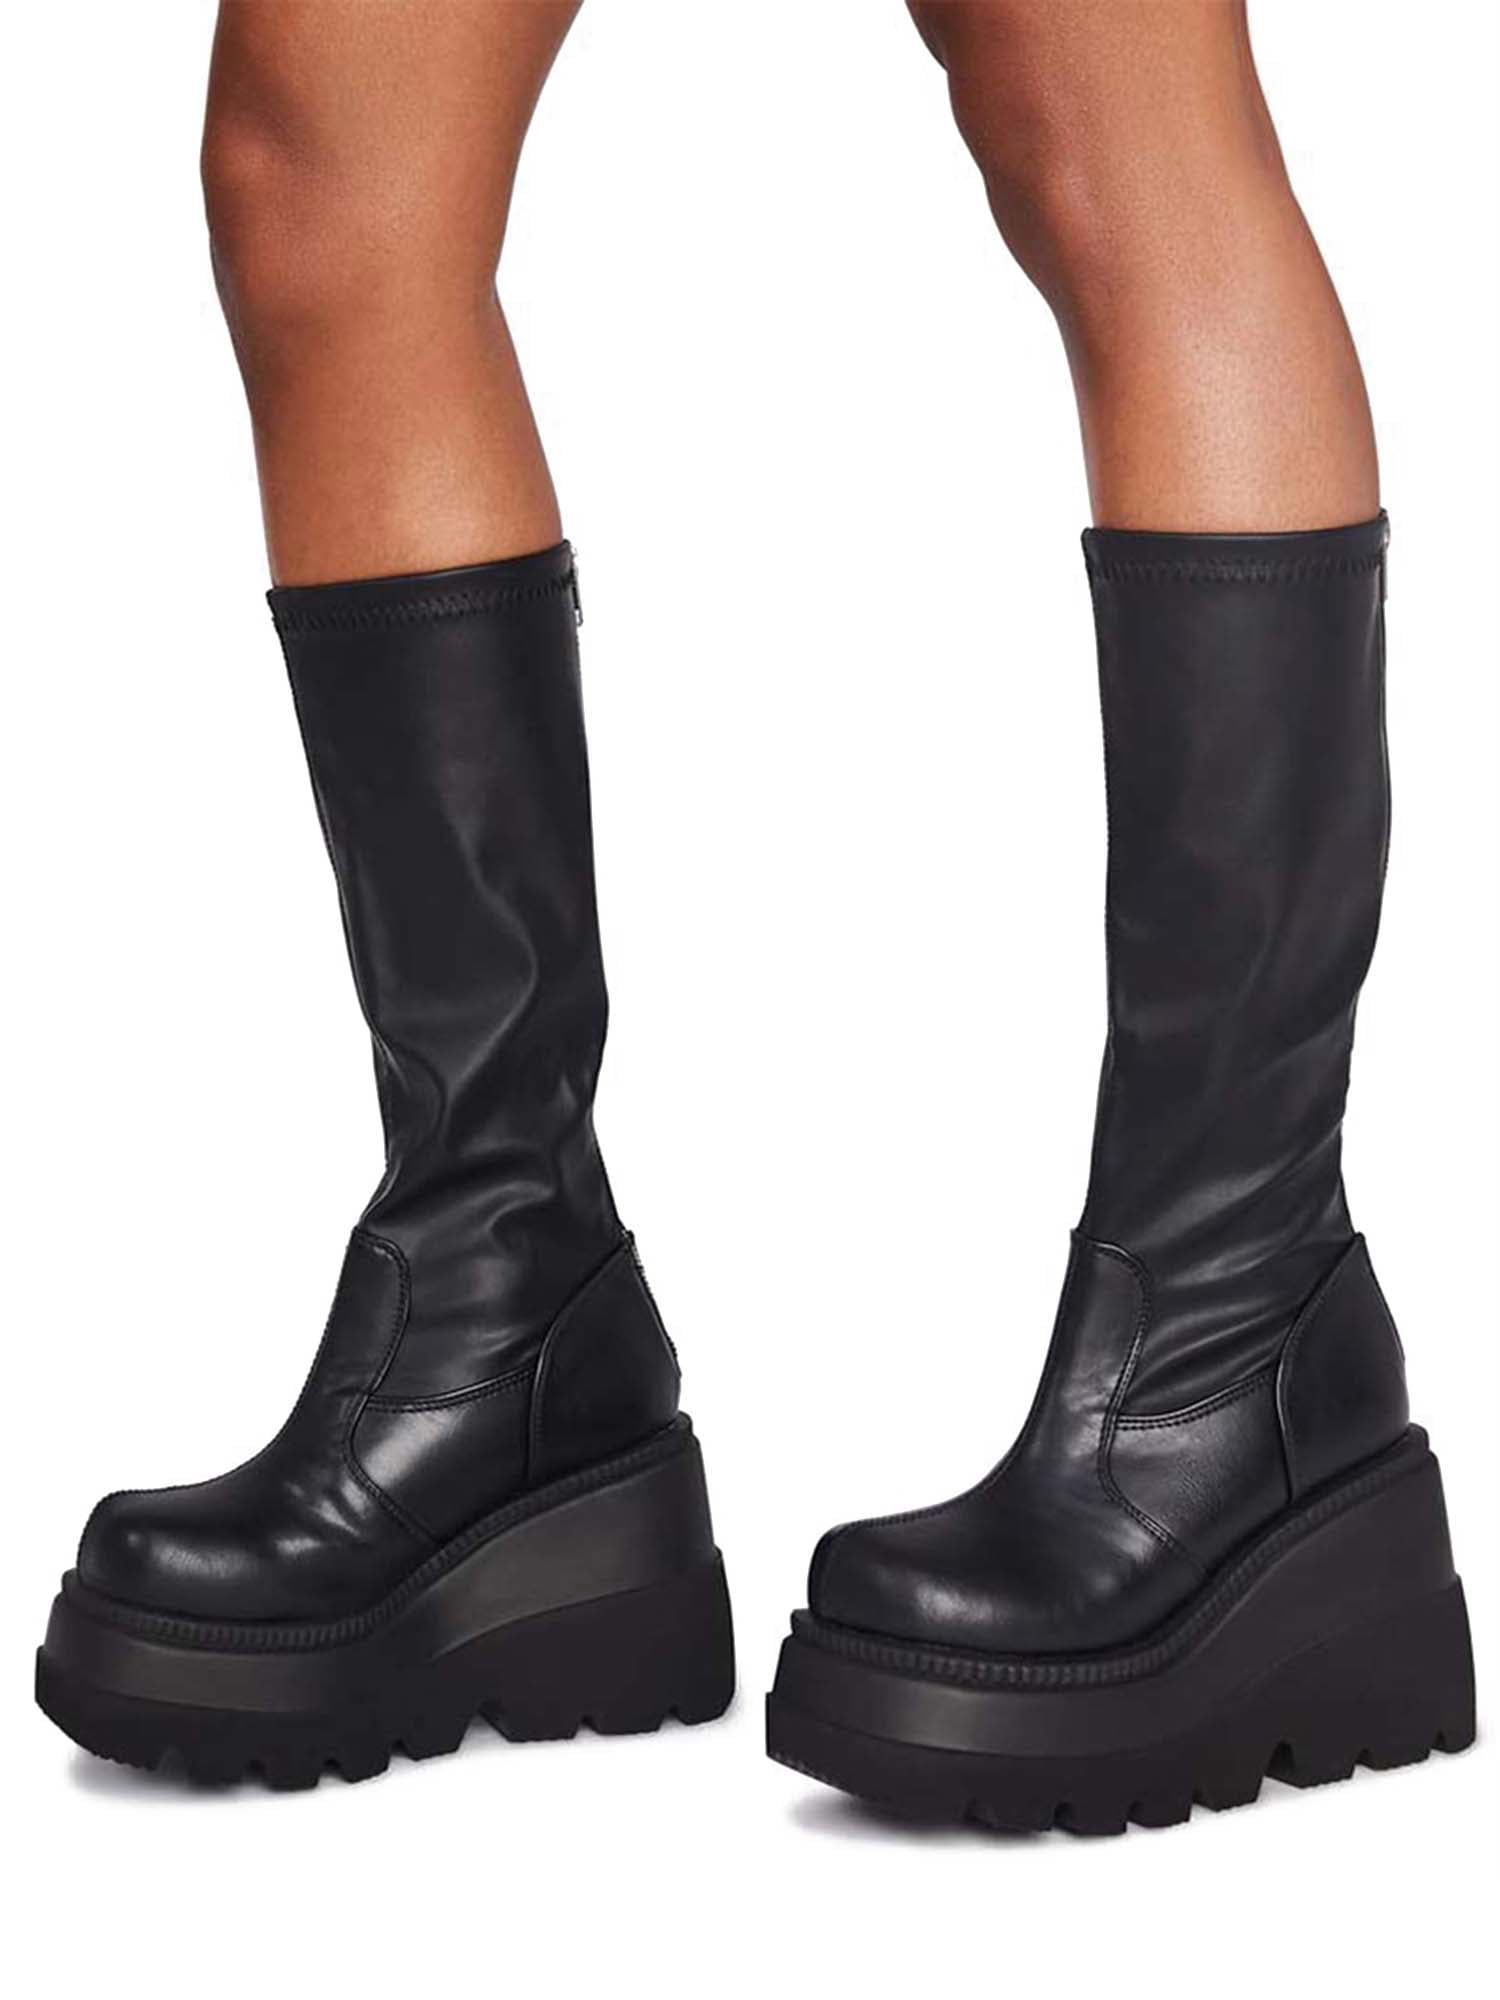 Black Vinyl Iridescent Thick Heeled Mid Calf Boot Sz 6.5 Chili's Sleek Platform Boot 90s NOS Chunky Platform Boots